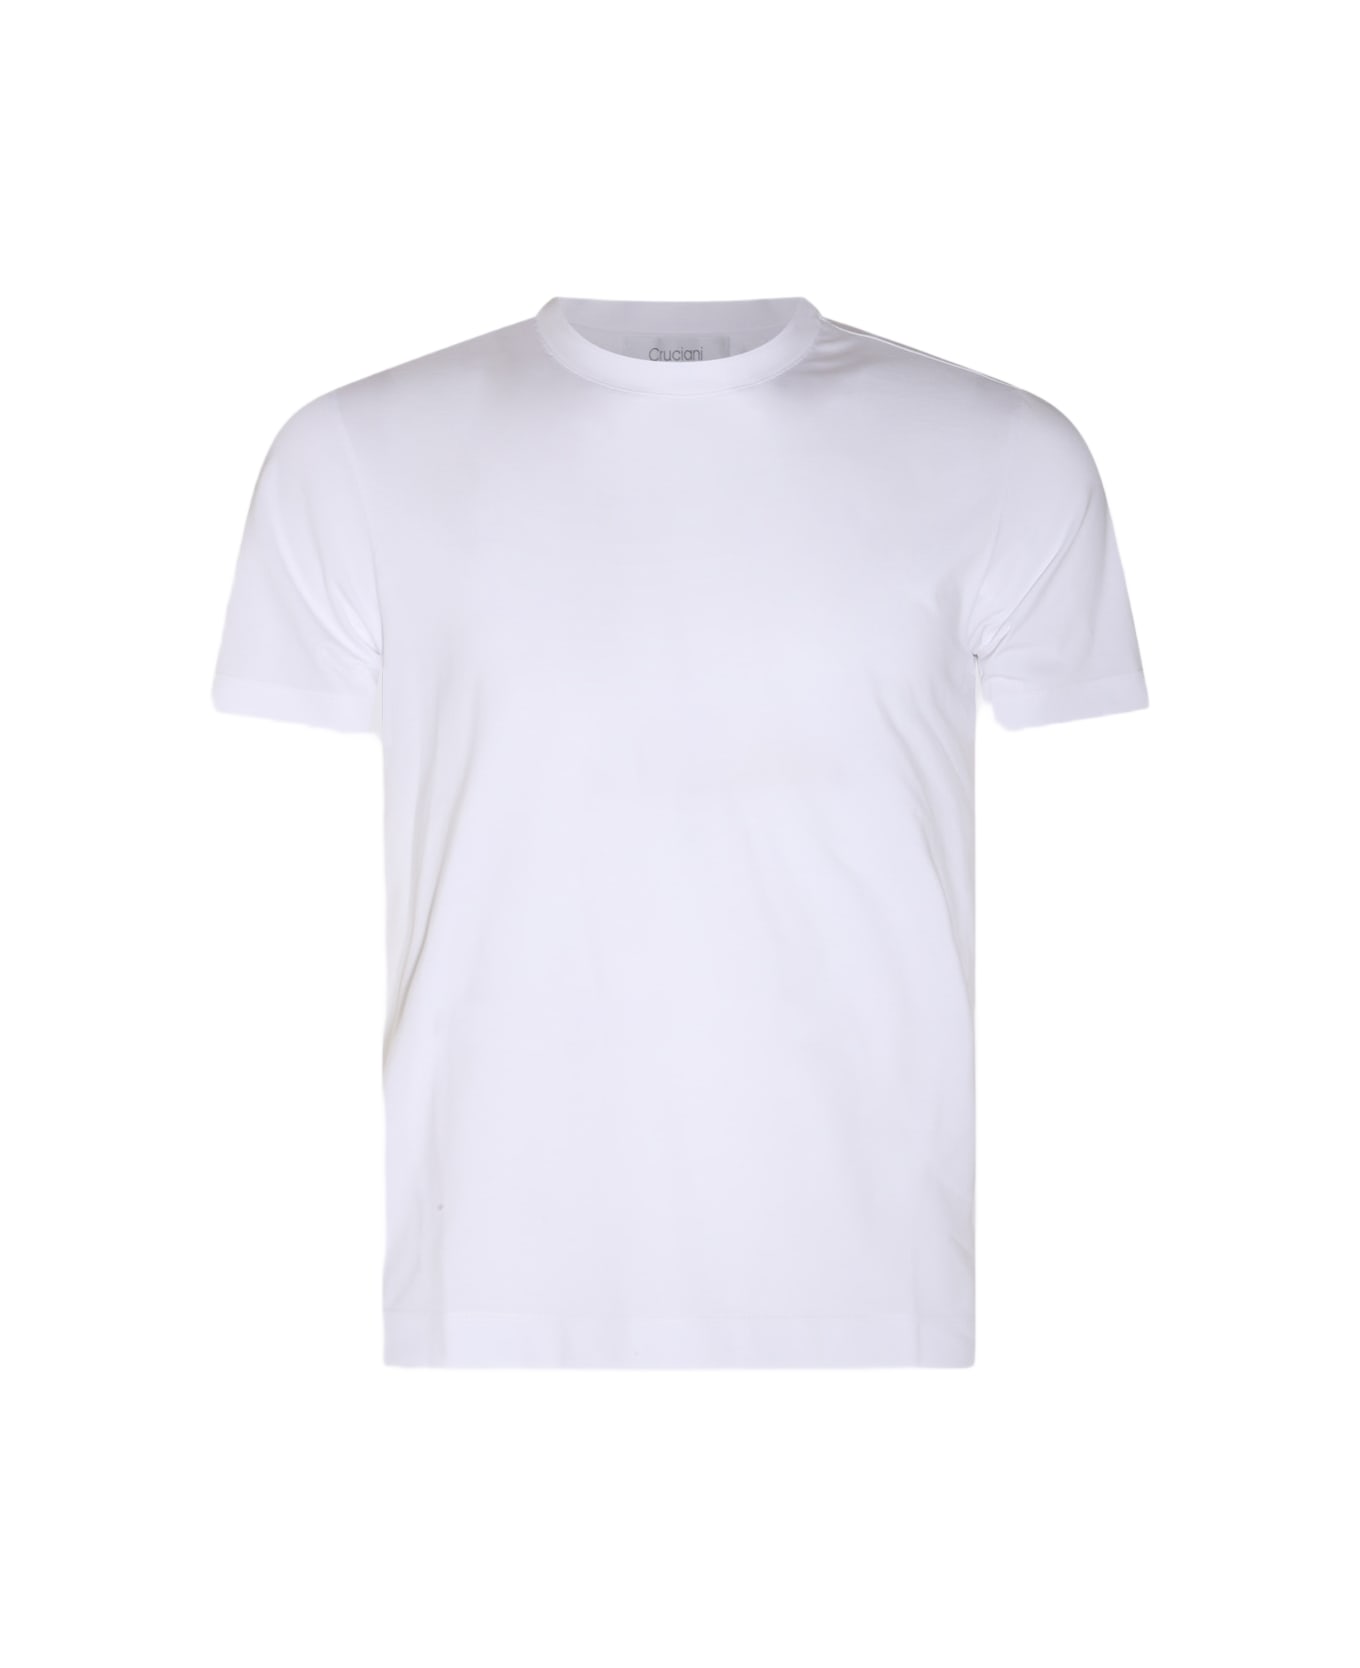 Cruciani White Cotton Blend T-shirt - White